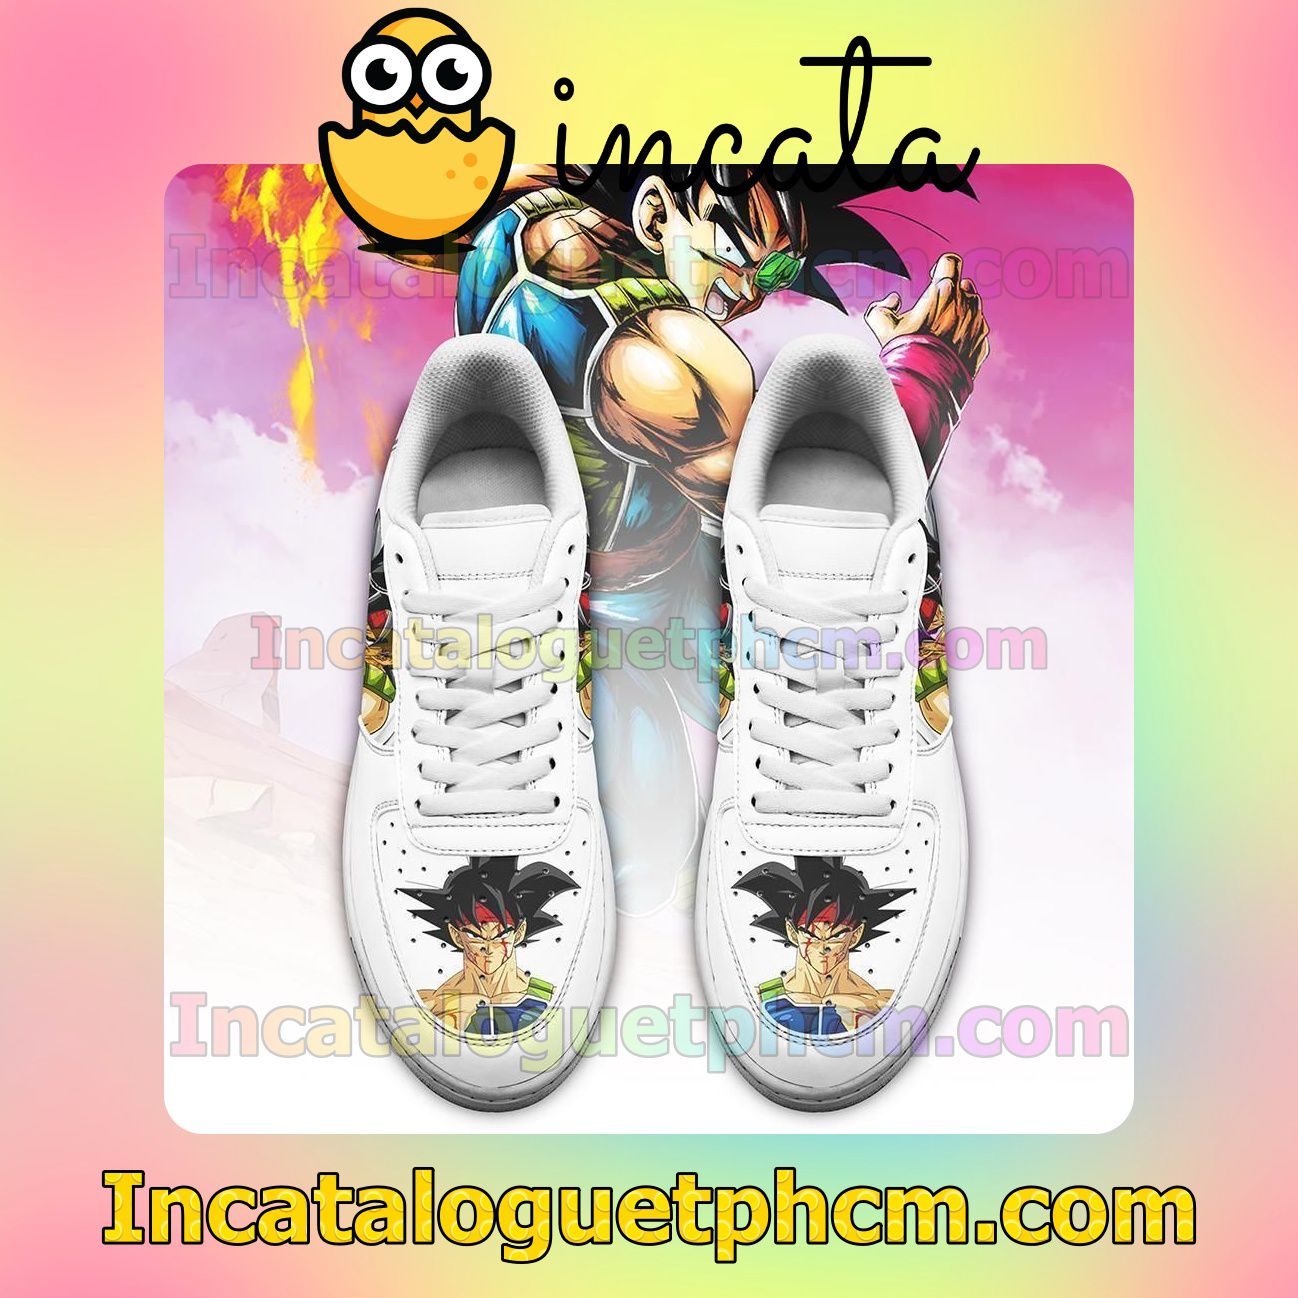 Discount Bardock Dragon Ball Z Anime Nike Low Shoes Sneakers